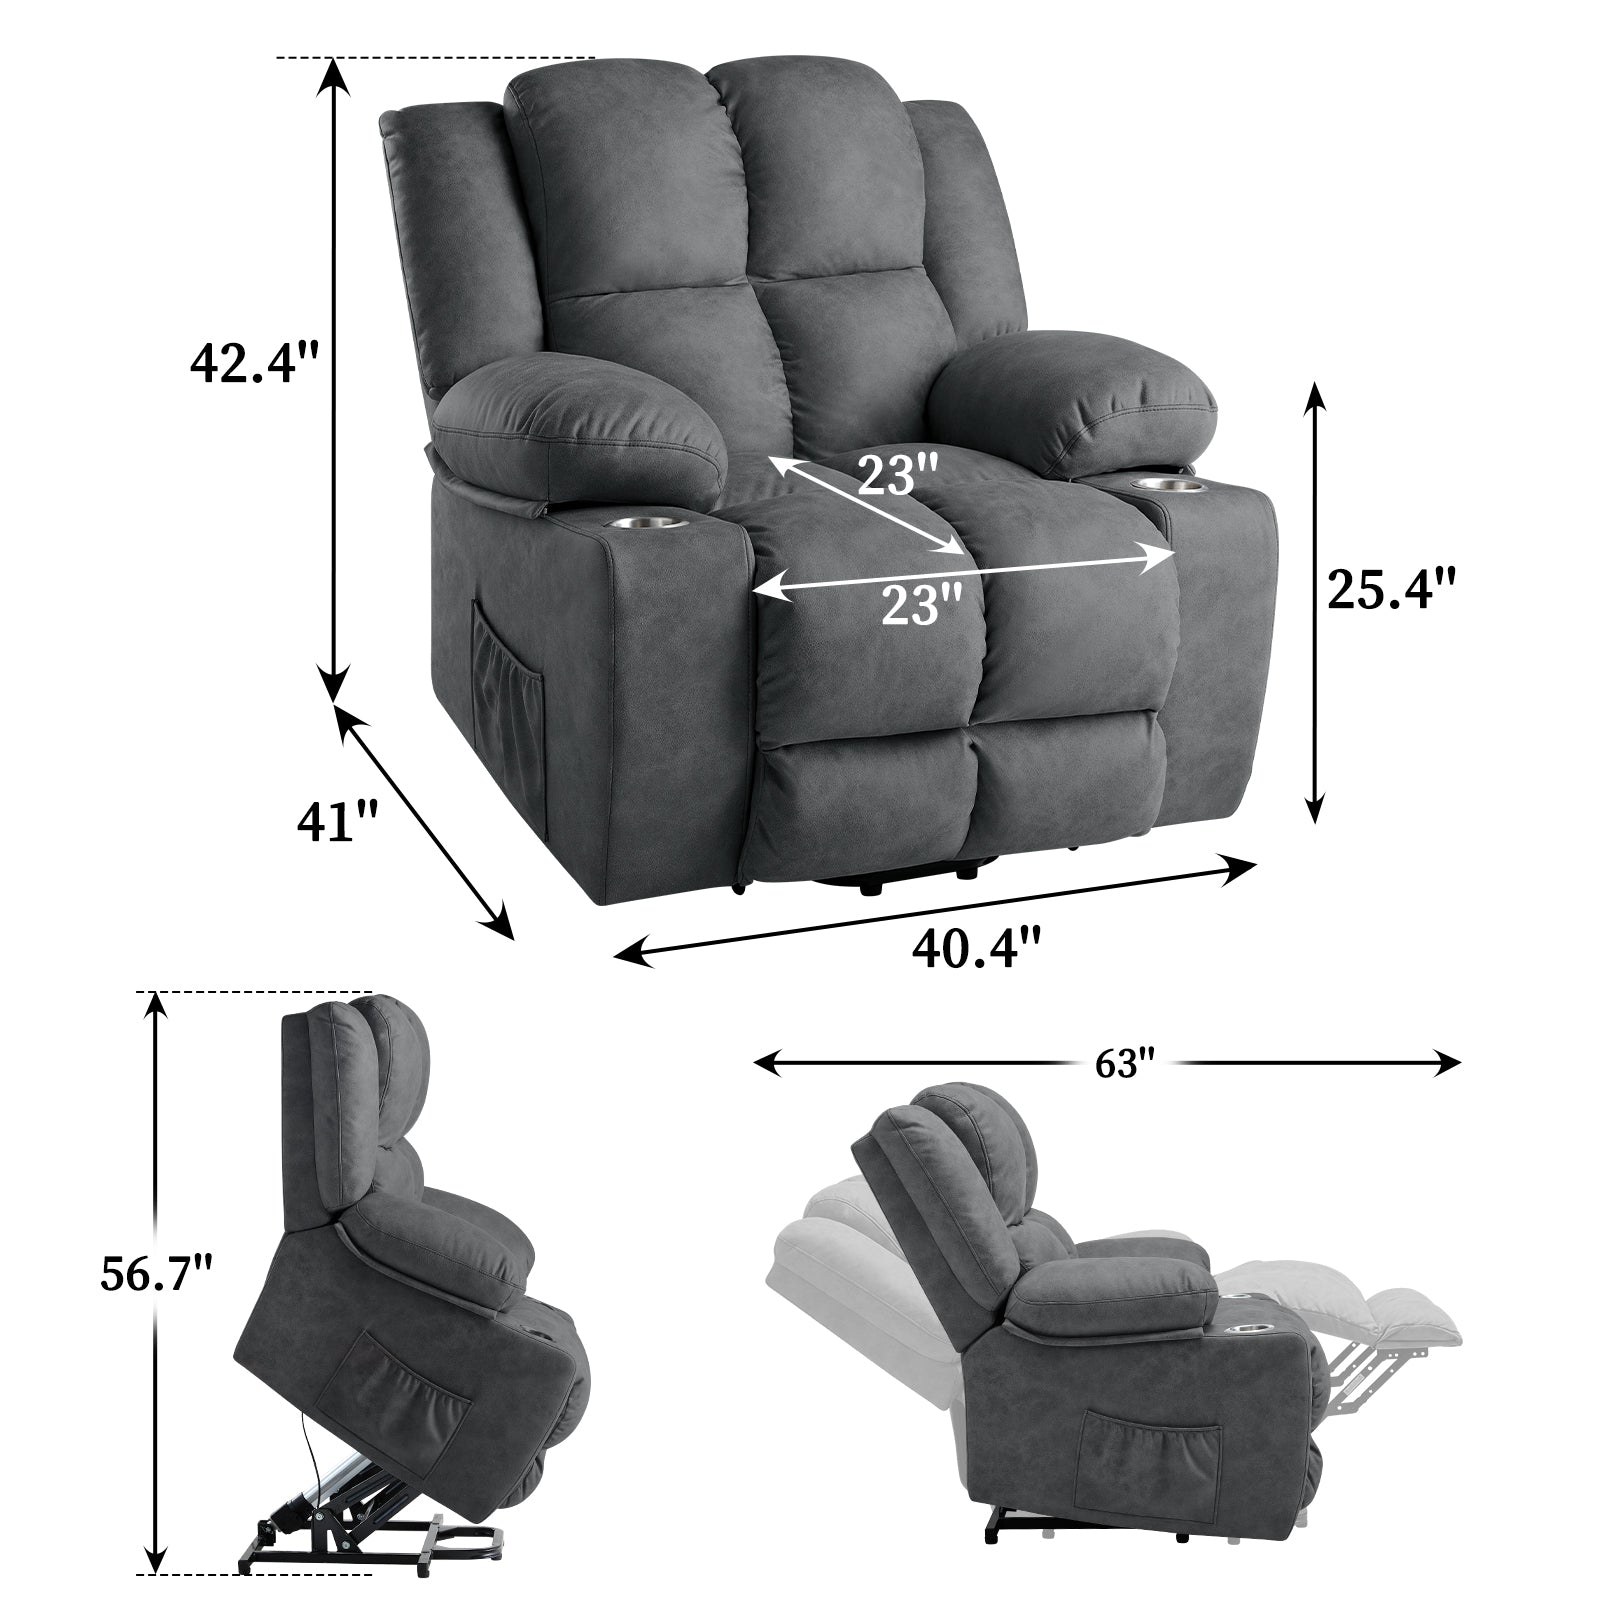 Power Lift Recliner Chair / Dark Grey